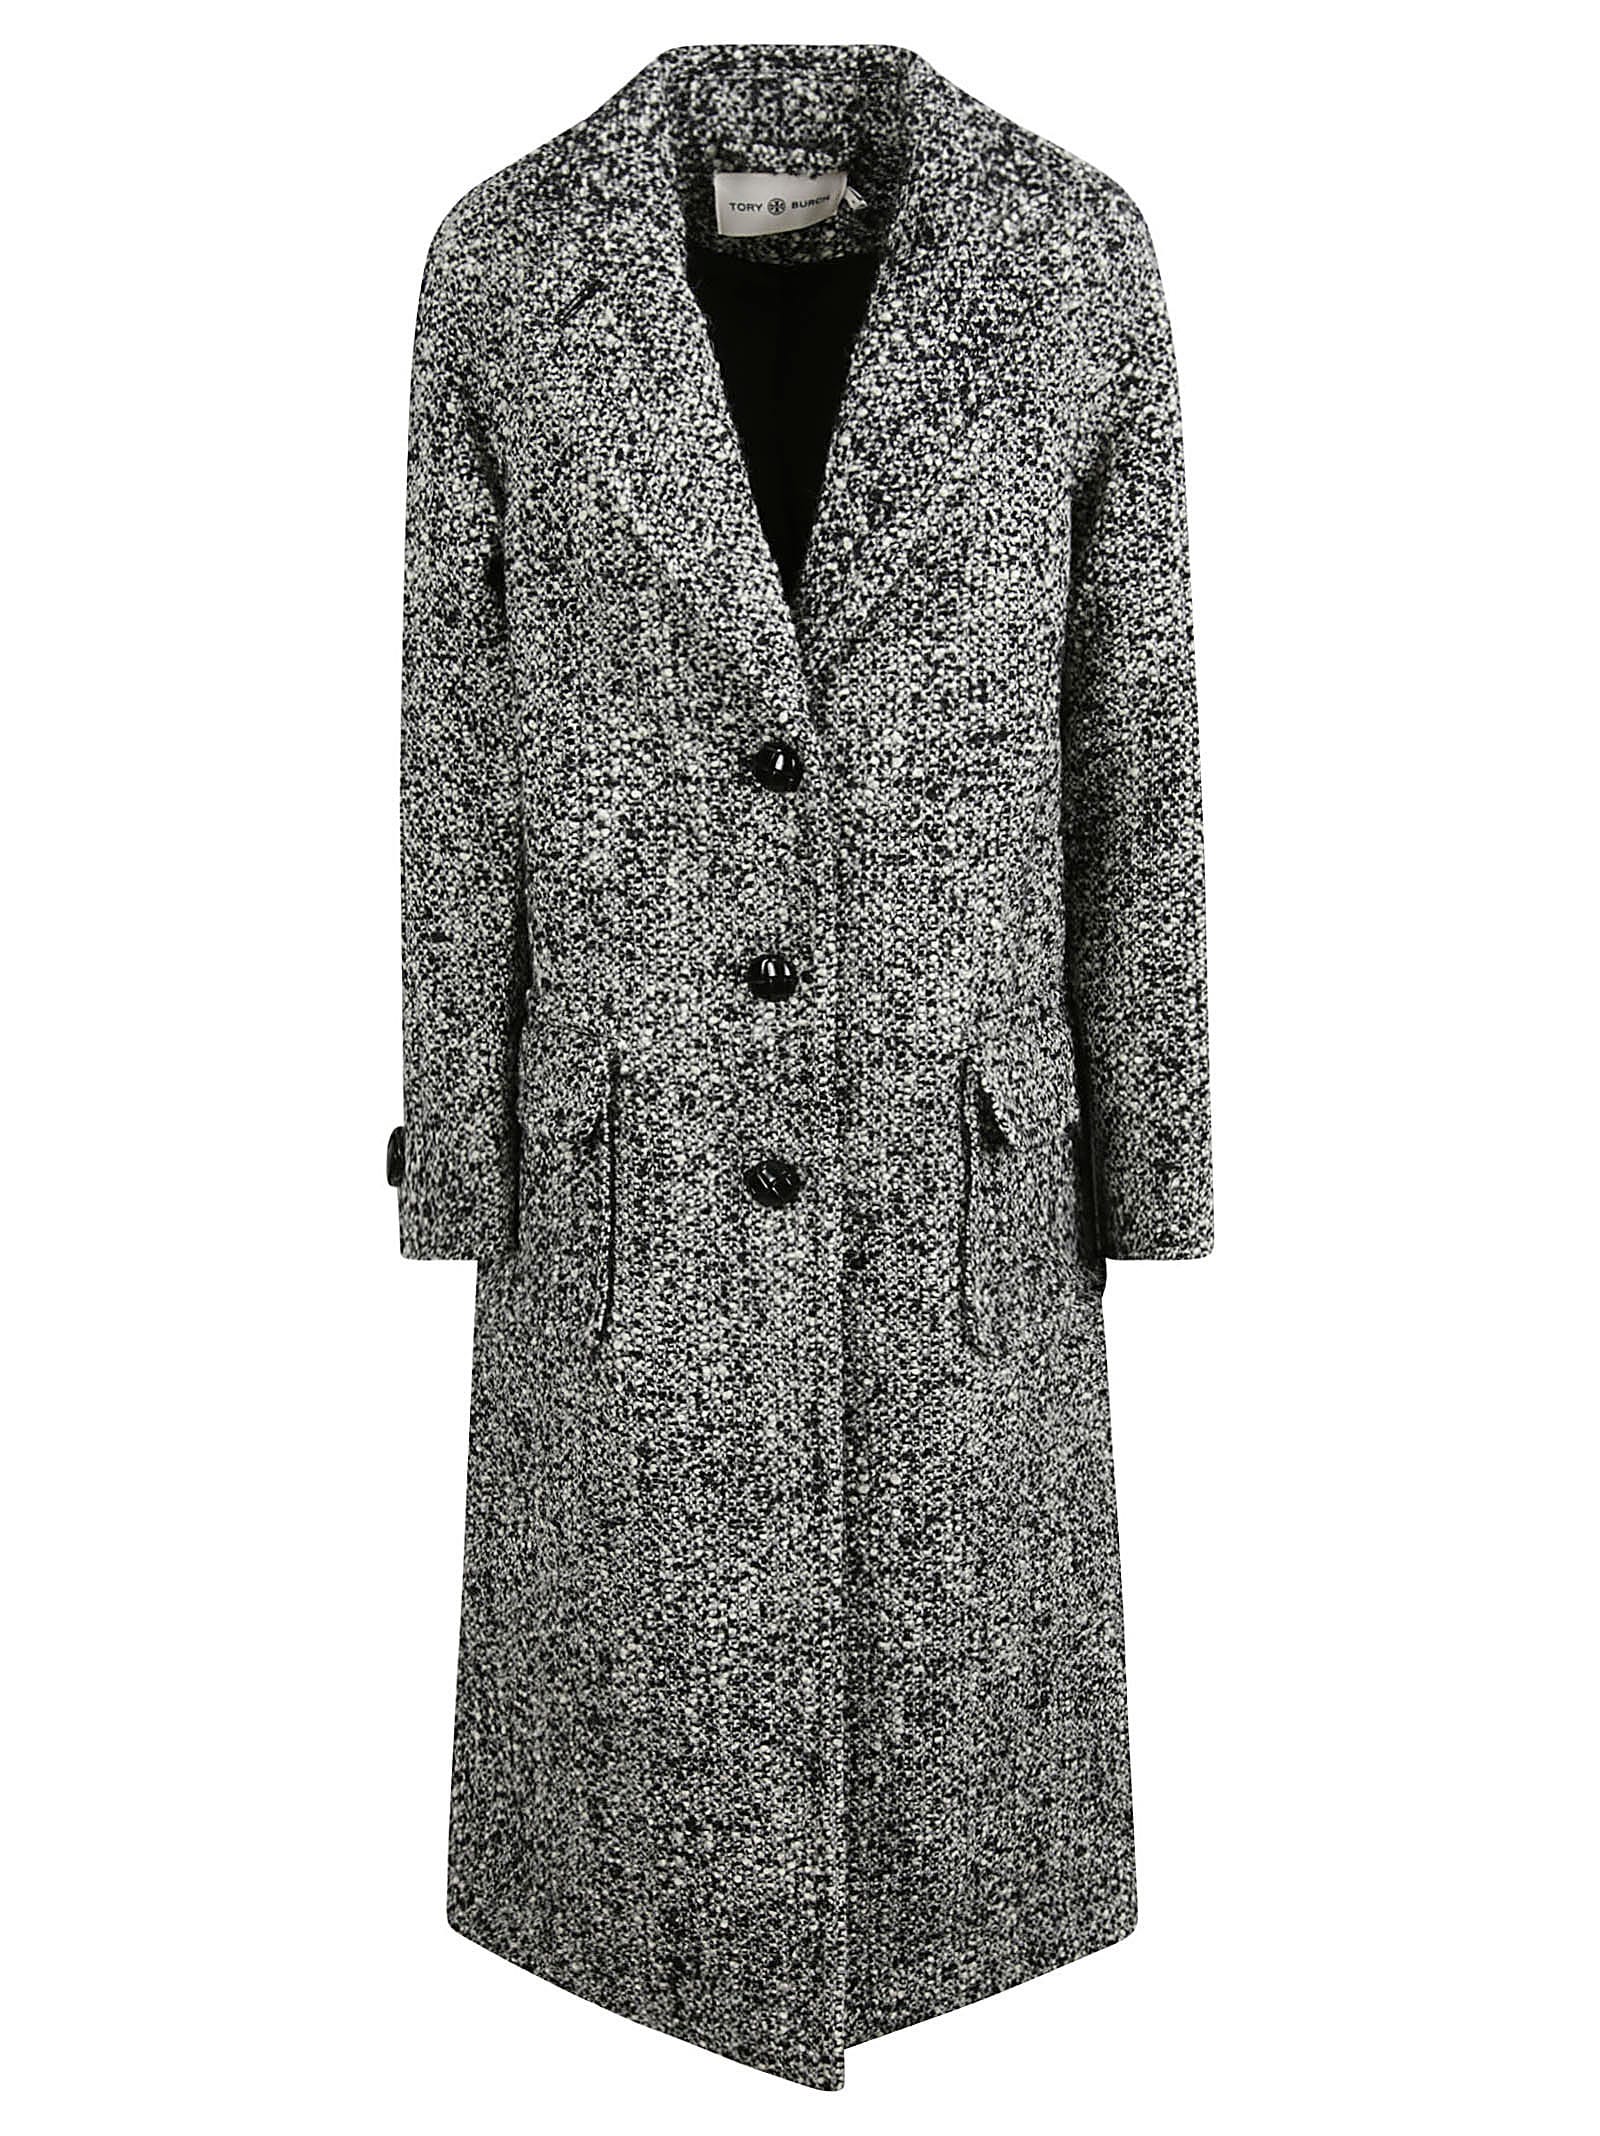 Tory Burch Oversized Tweed Coat